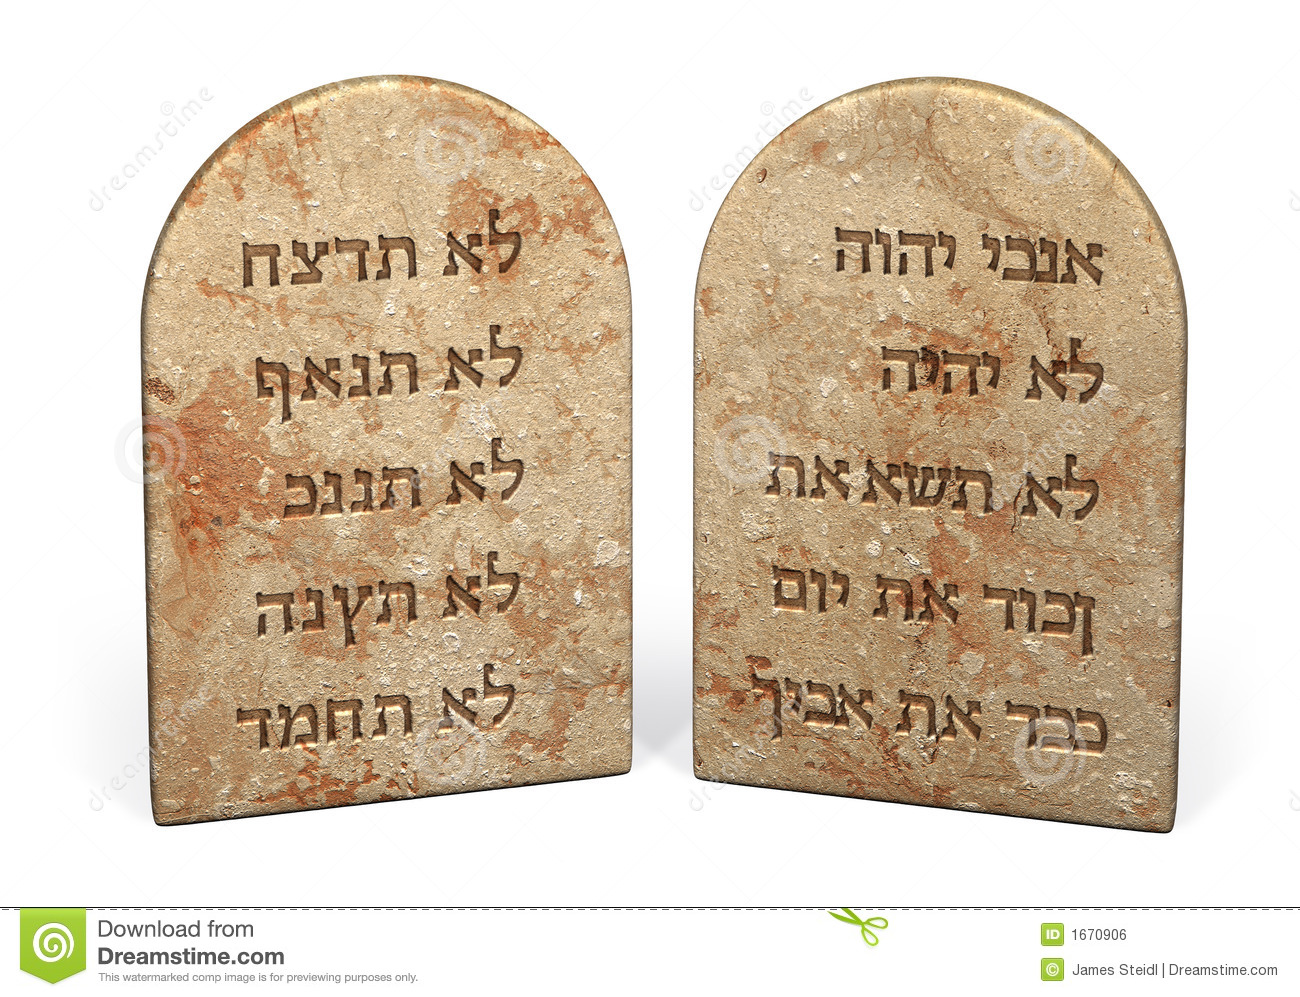 10 Commandments Royalty Free Stock Image   Image  1670906